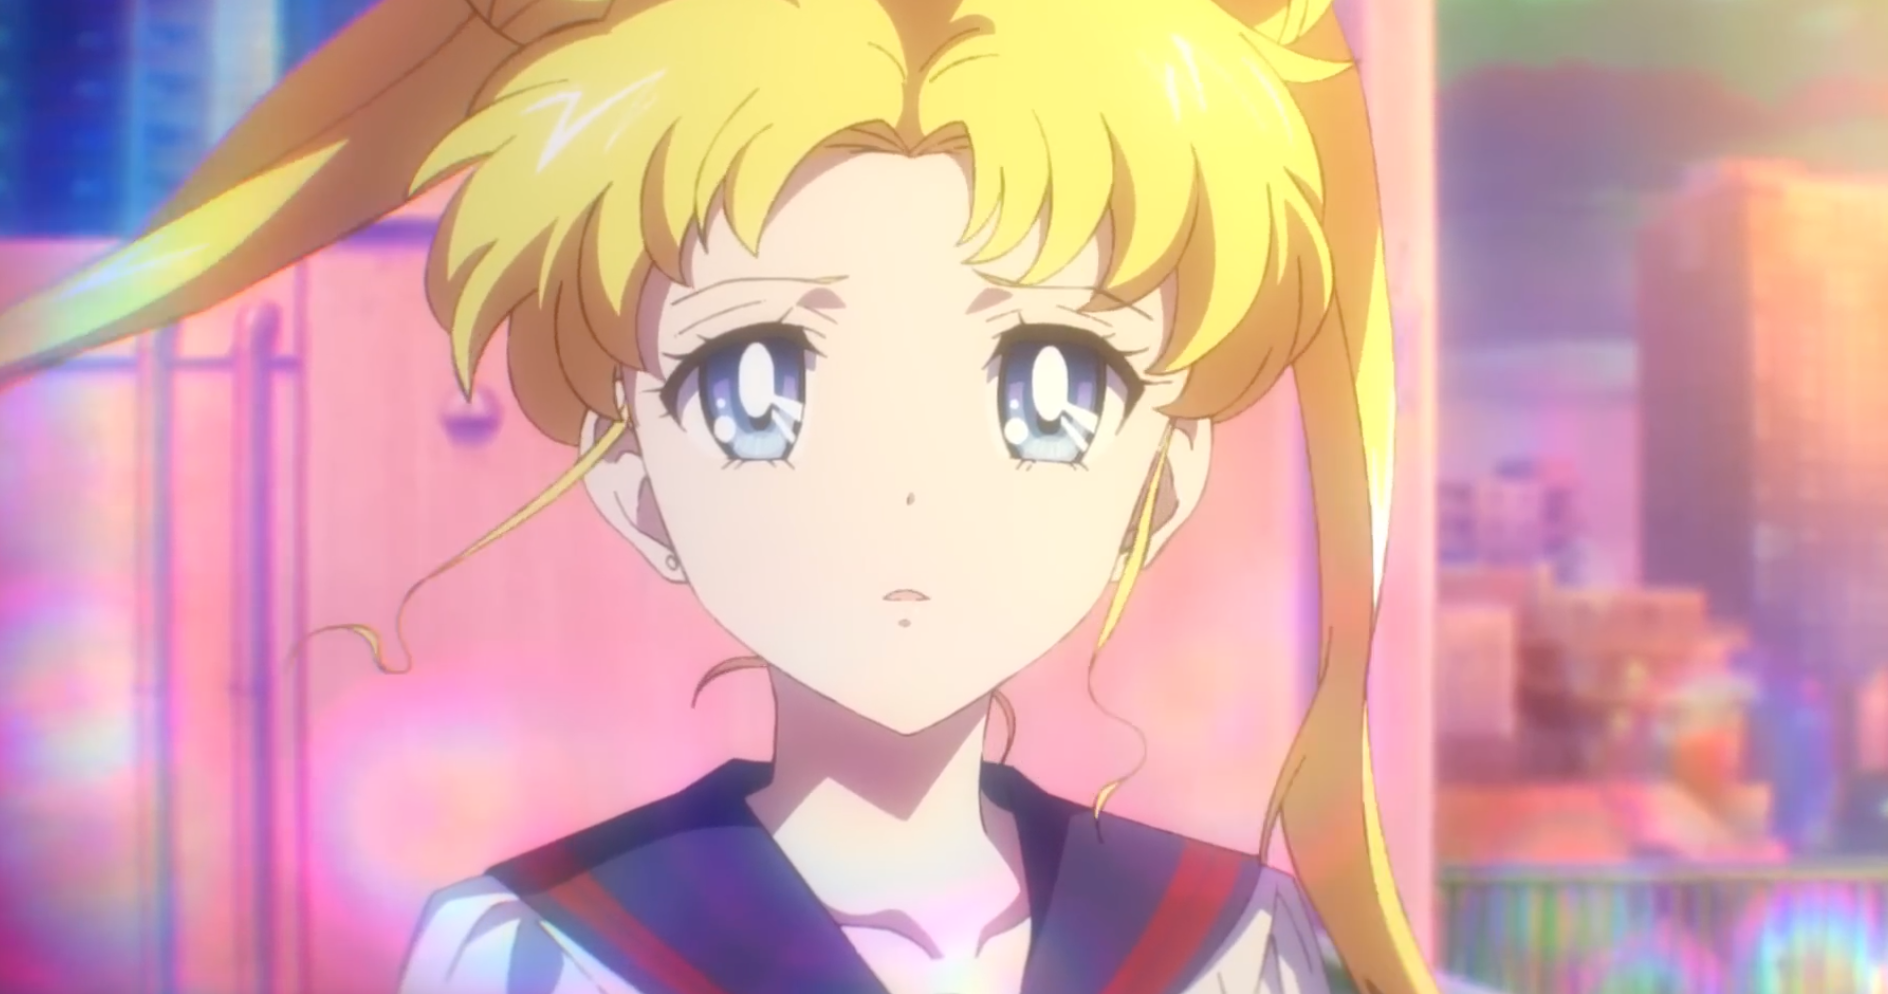 Sailor Moon Crystal Set - Official English Trailer 